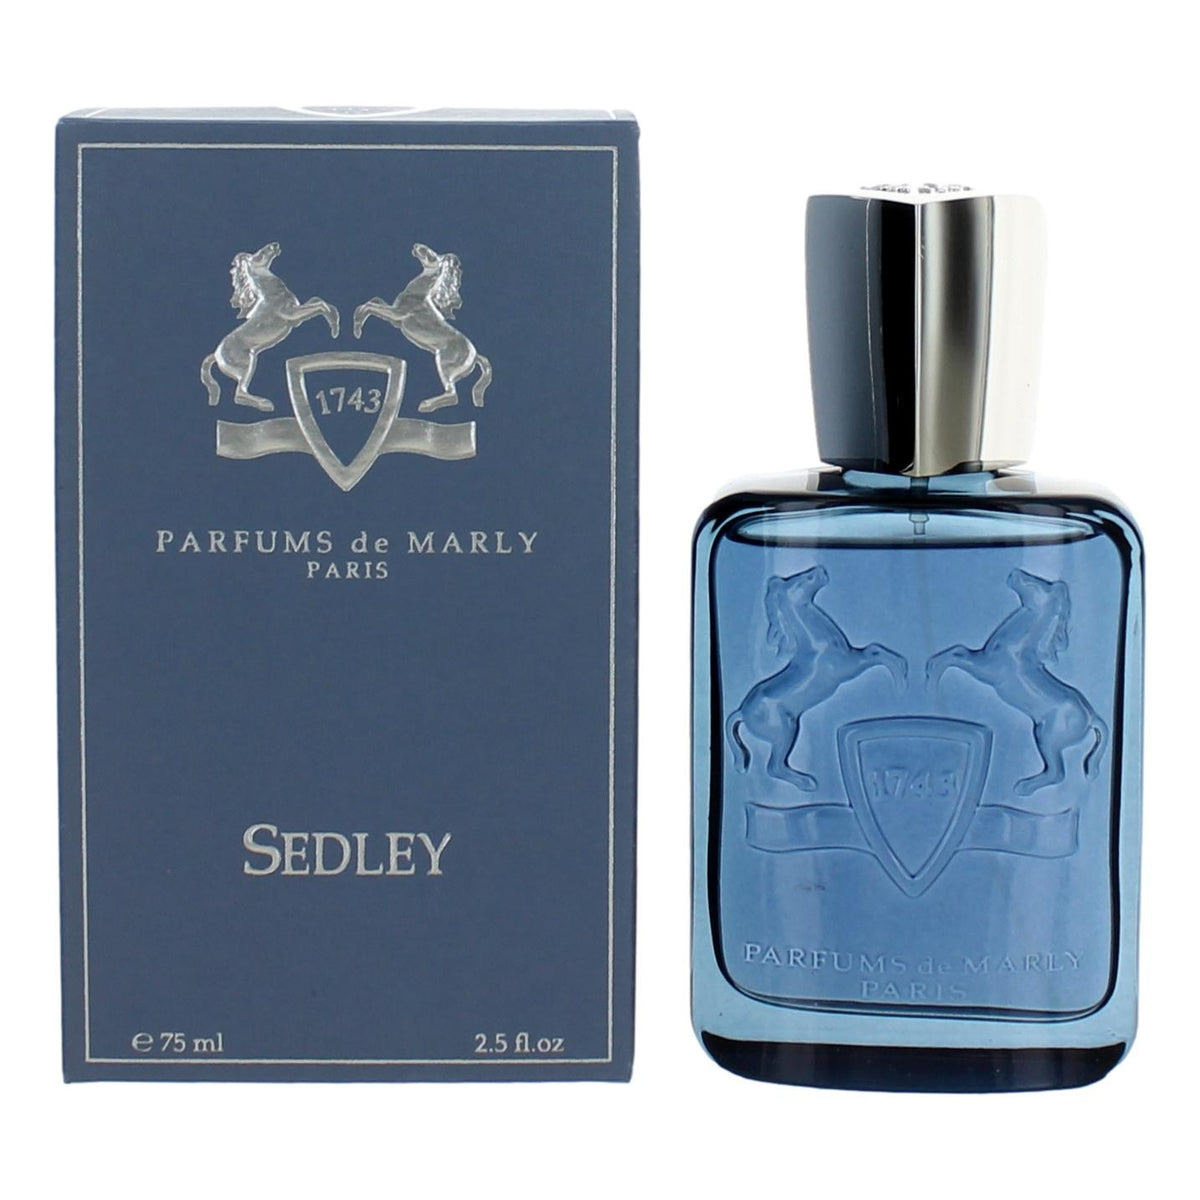 Parfums de Marly Sedley by Parfums de Marly, 2.5 oz Eau De Parfum Spray for Men